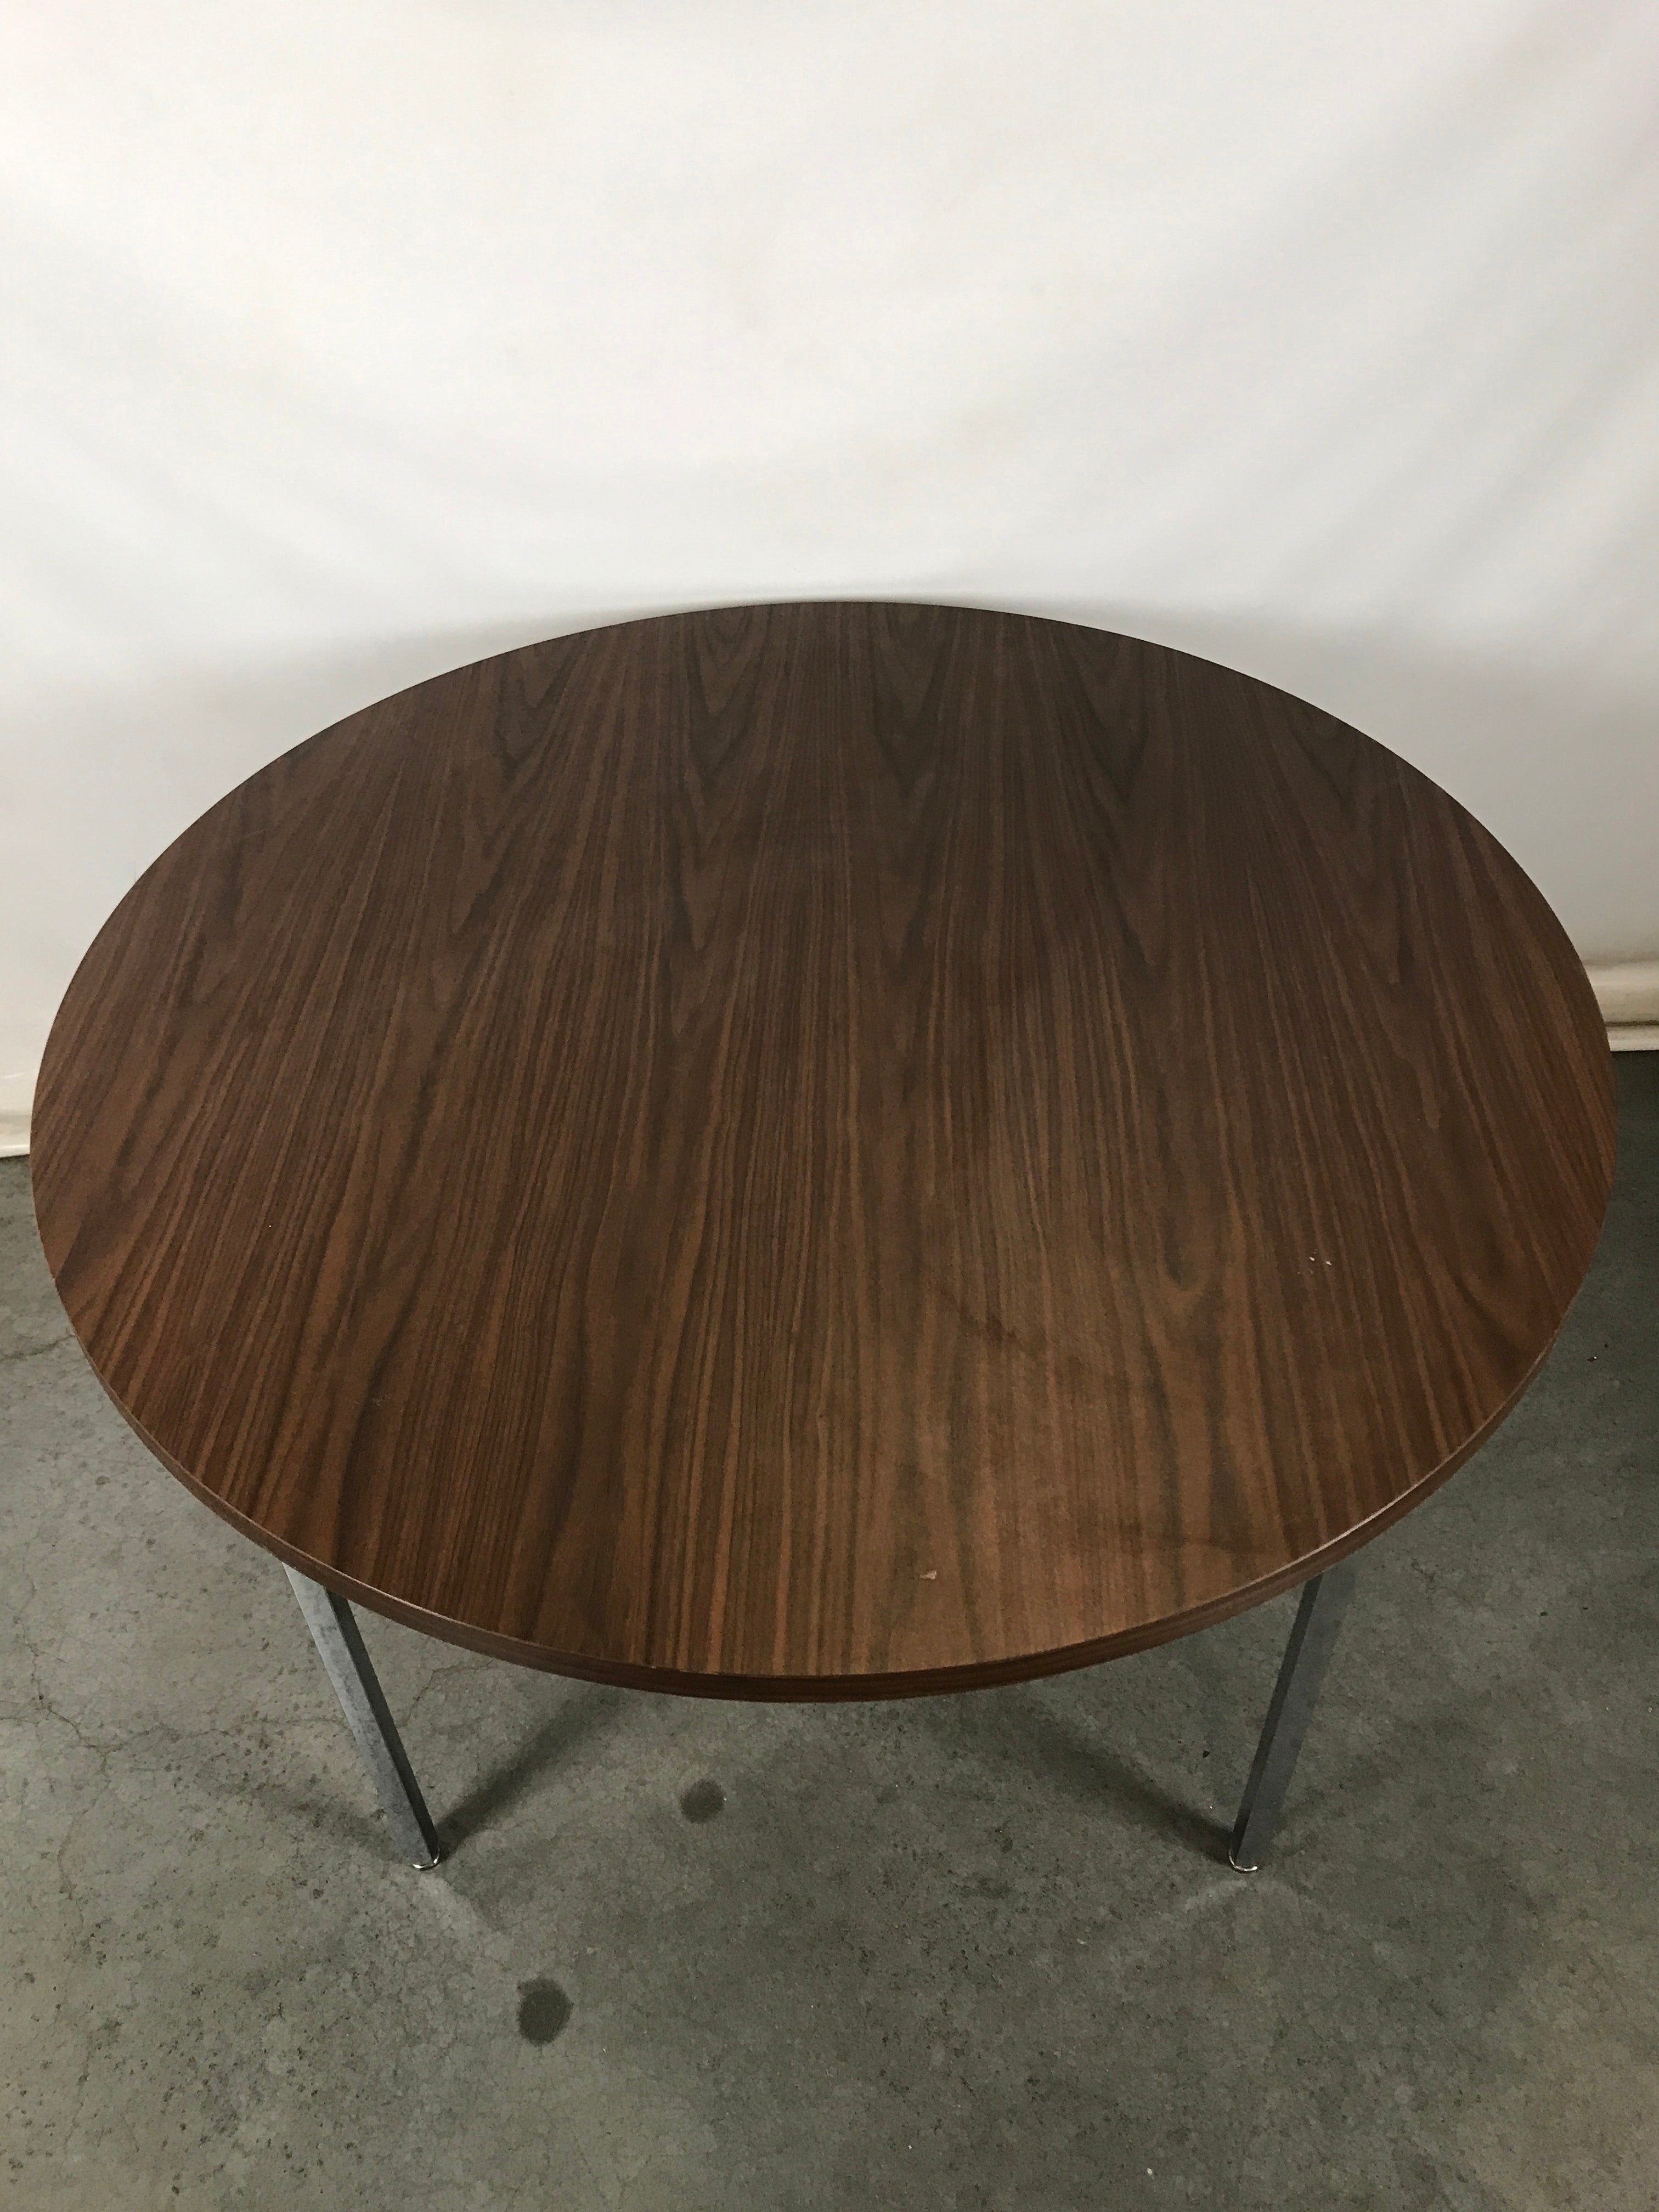 Circular Brown Wooden Table